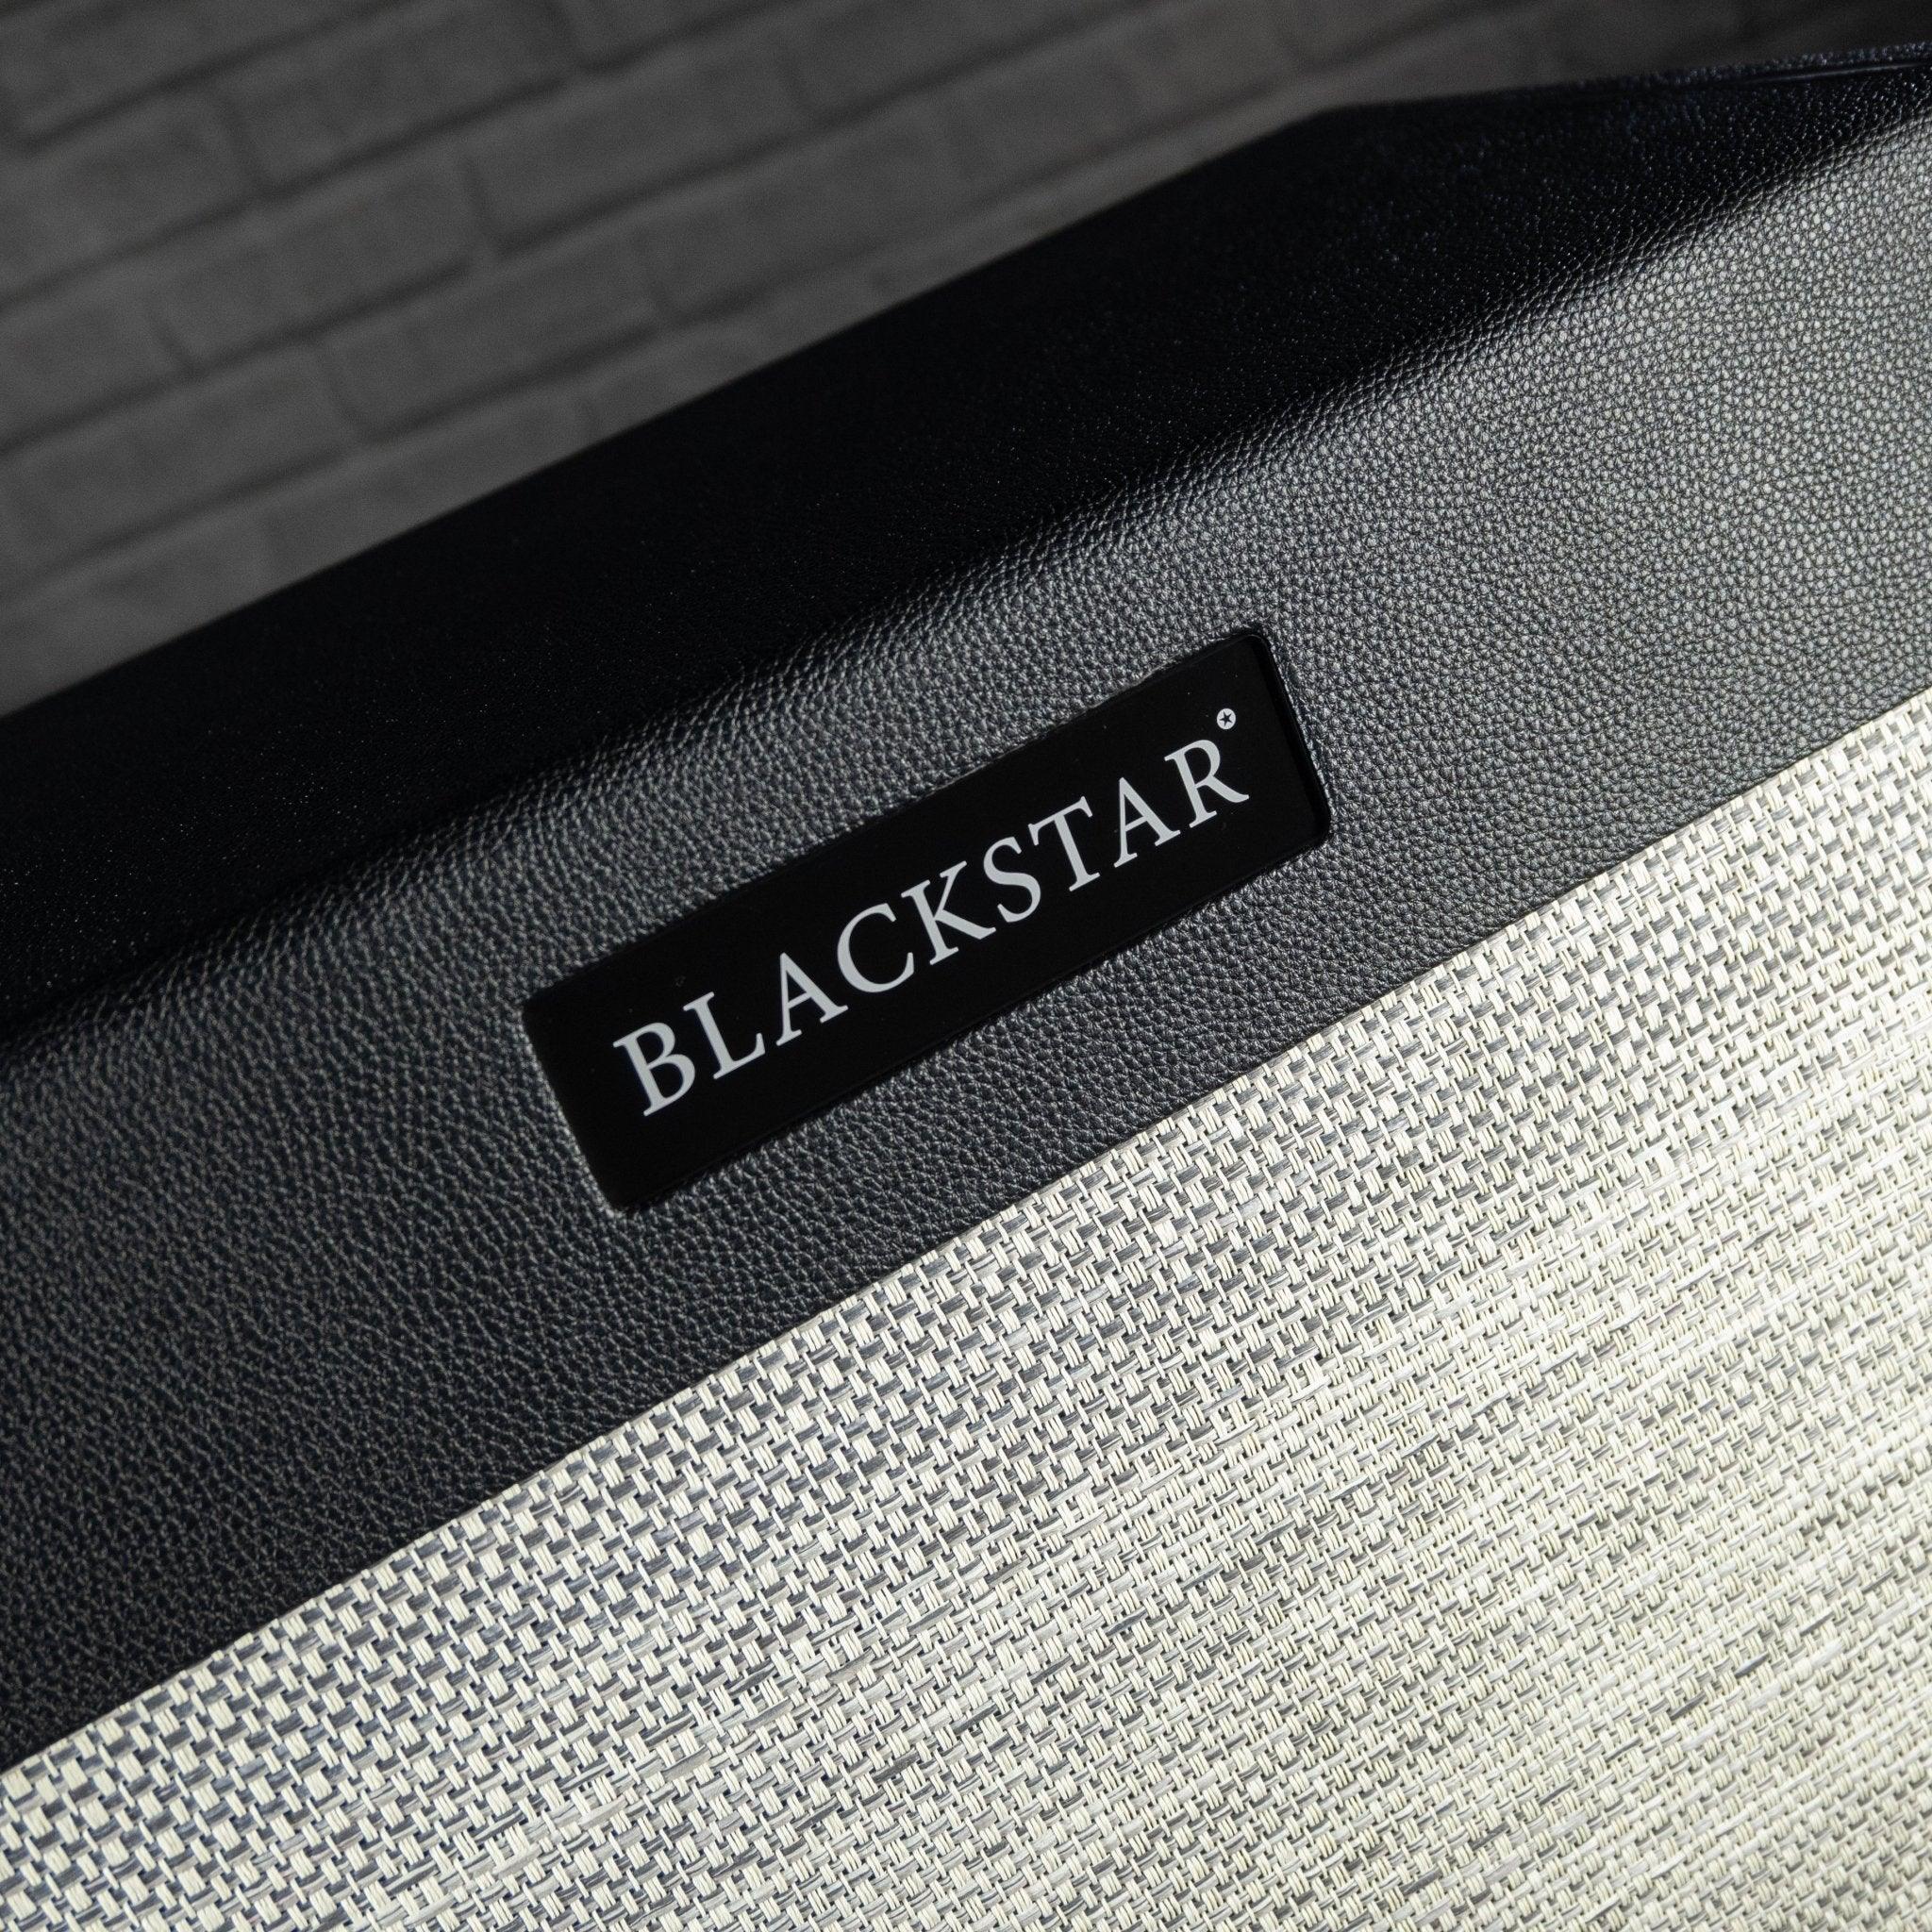 Blackstar St. James 212VOC Black Cabinet - Impulse Music Co.